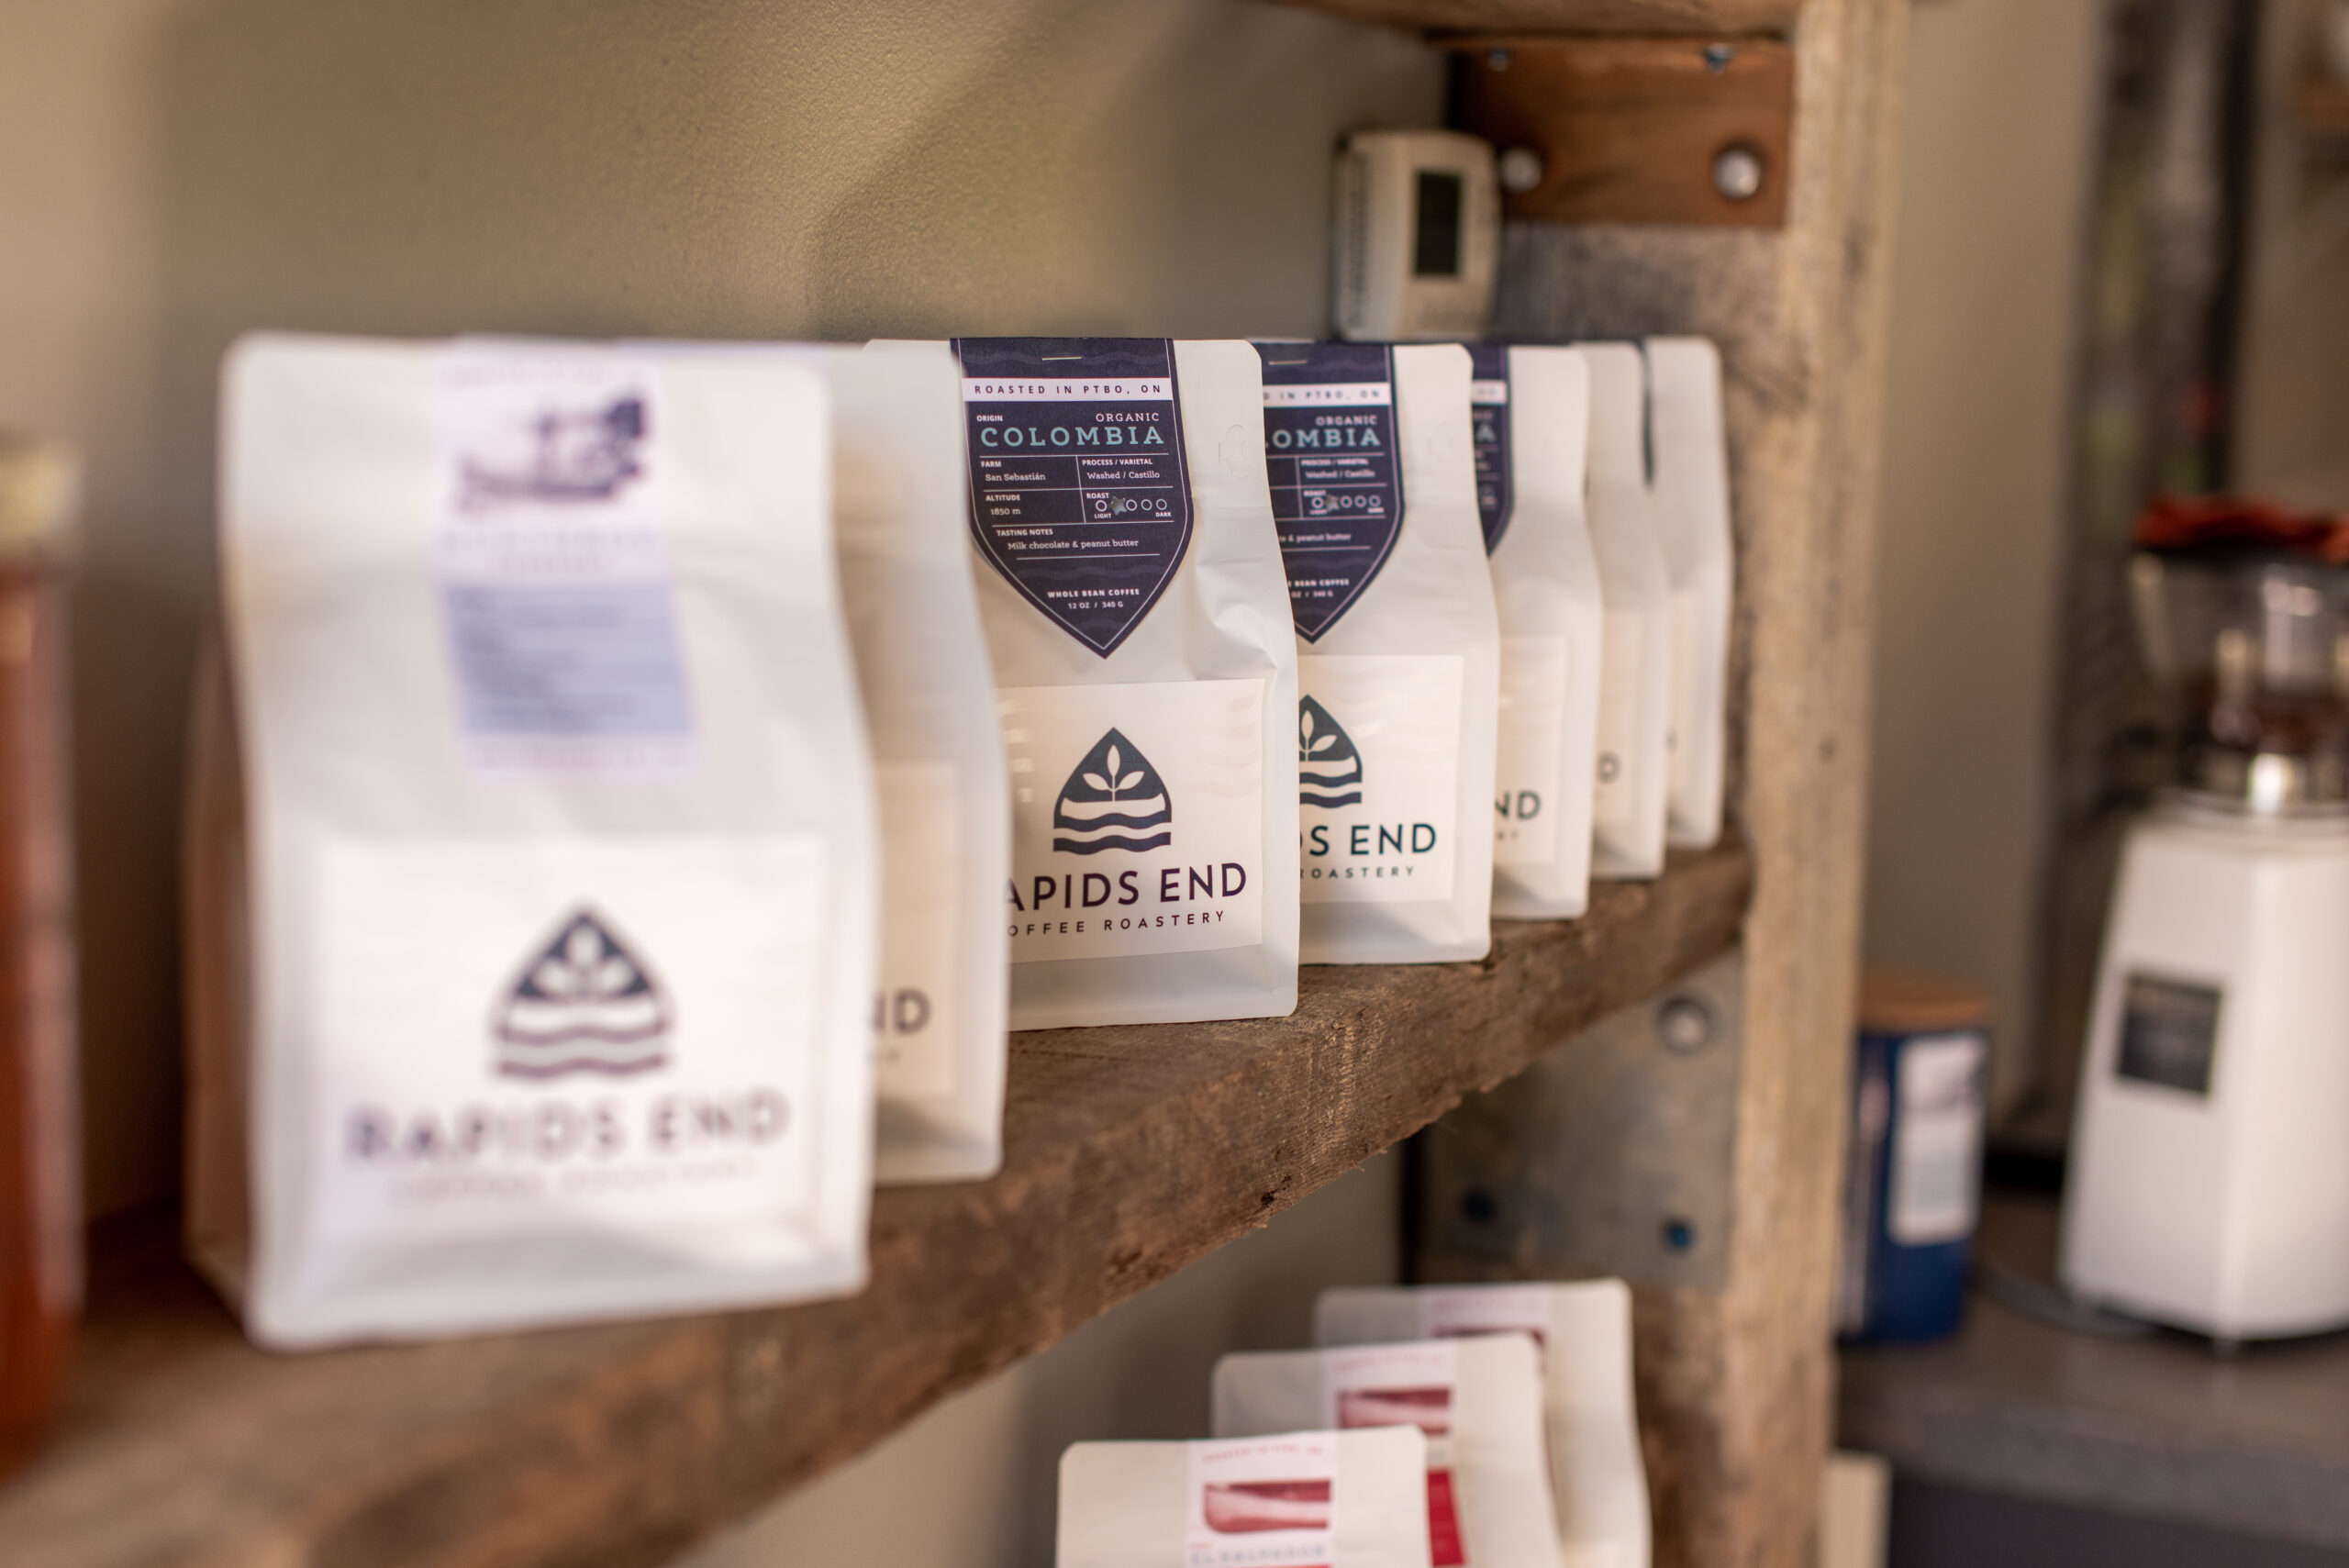 Rapids End coffee packets arranged on a shelf